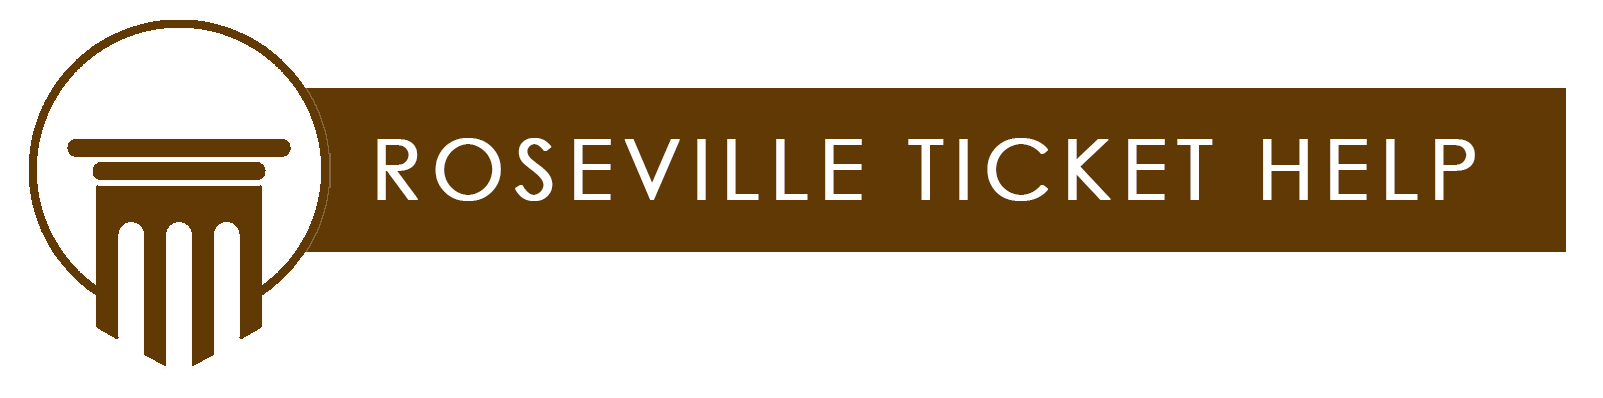 Roseville Ticket